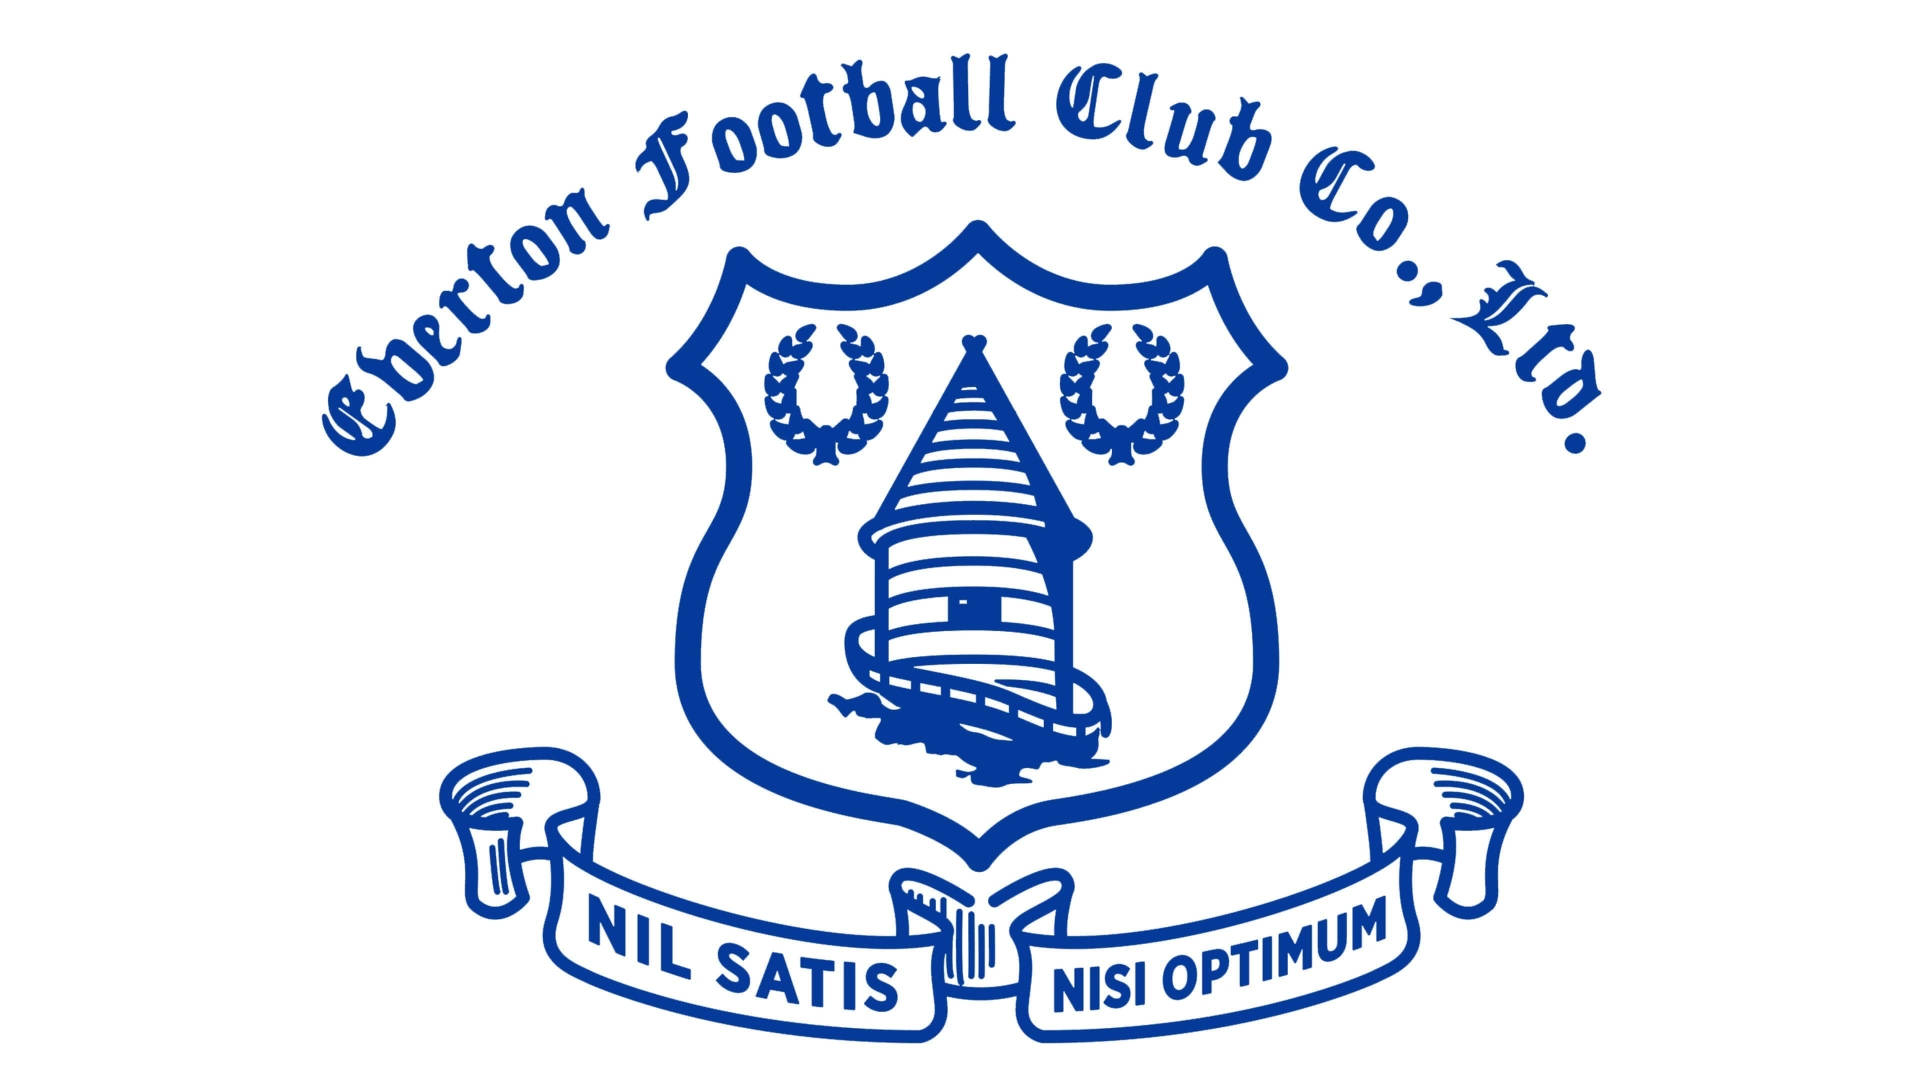 Monochrome Everton F.c Crest Background